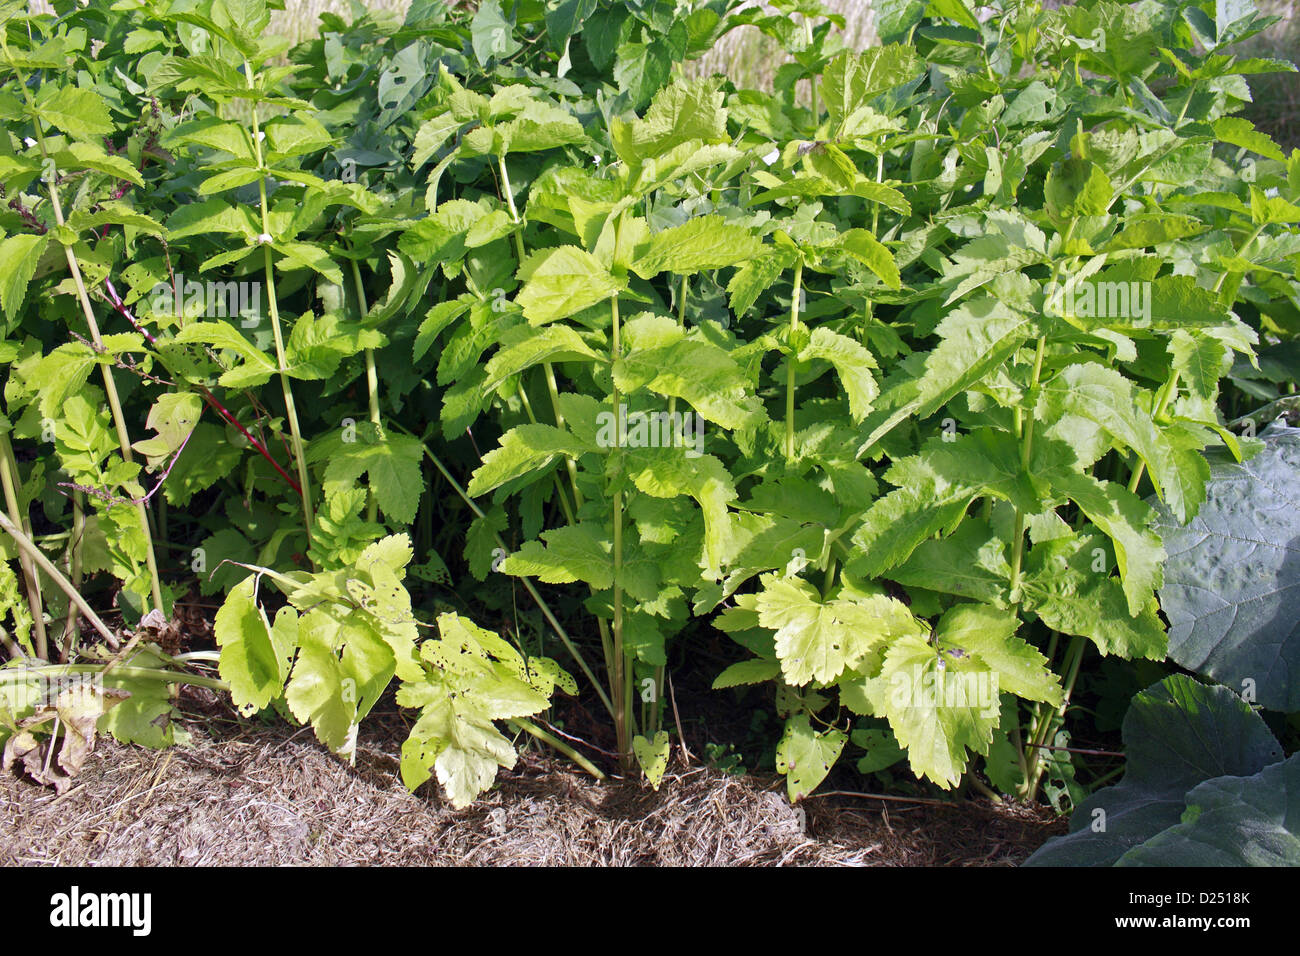 Parsnip (Pastinaca sativa) crop, growing in garden vegetable plot, Bacton, Suffolk, England, august Stock Photo